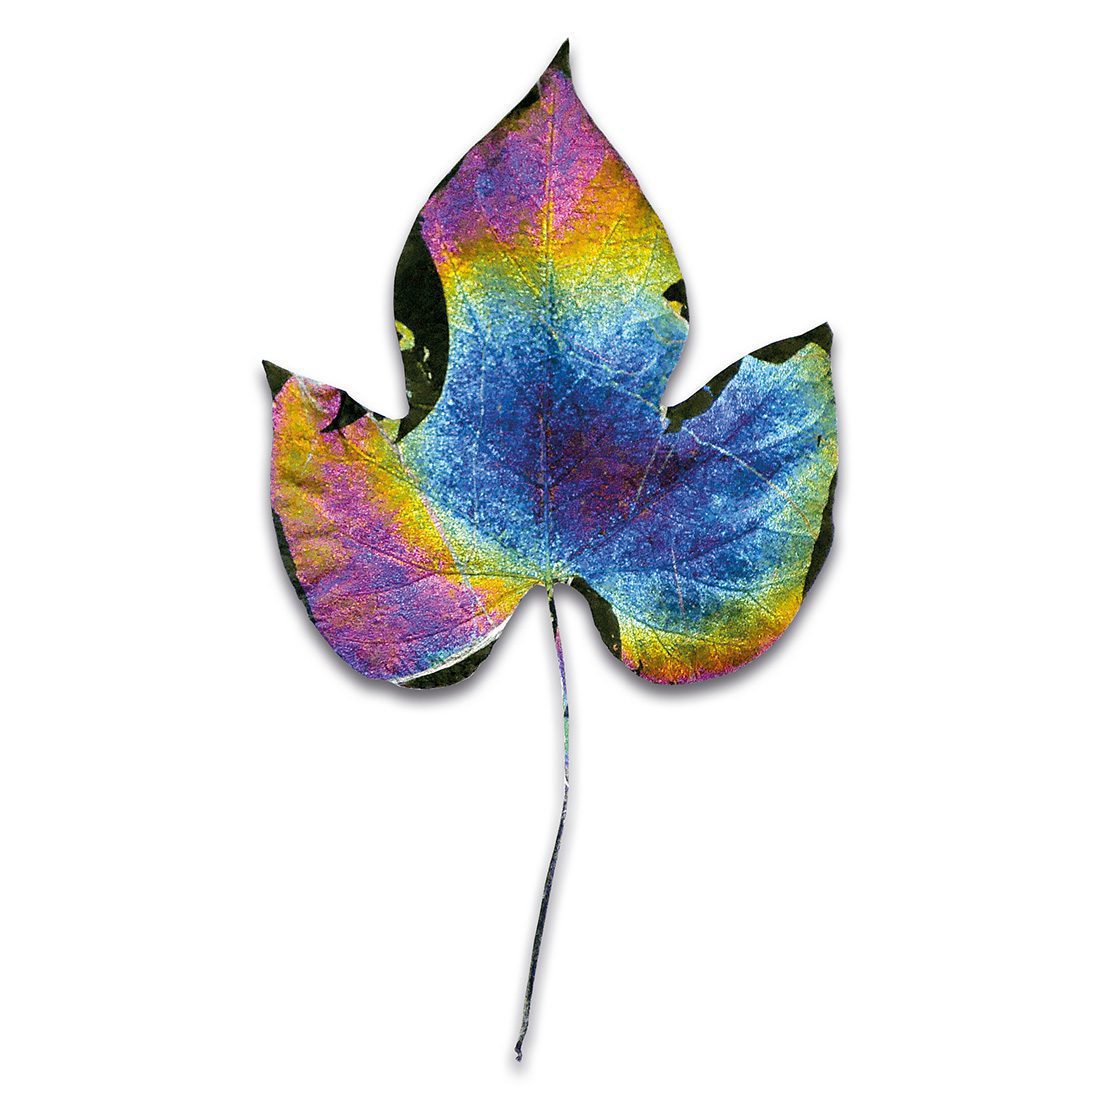 Ipomoae purpurea - Morning glory - Liseron pourpre - Cyril Blin de Belin - Artiste Anthropocene - Une odyssée des couleurs - A color odyssey